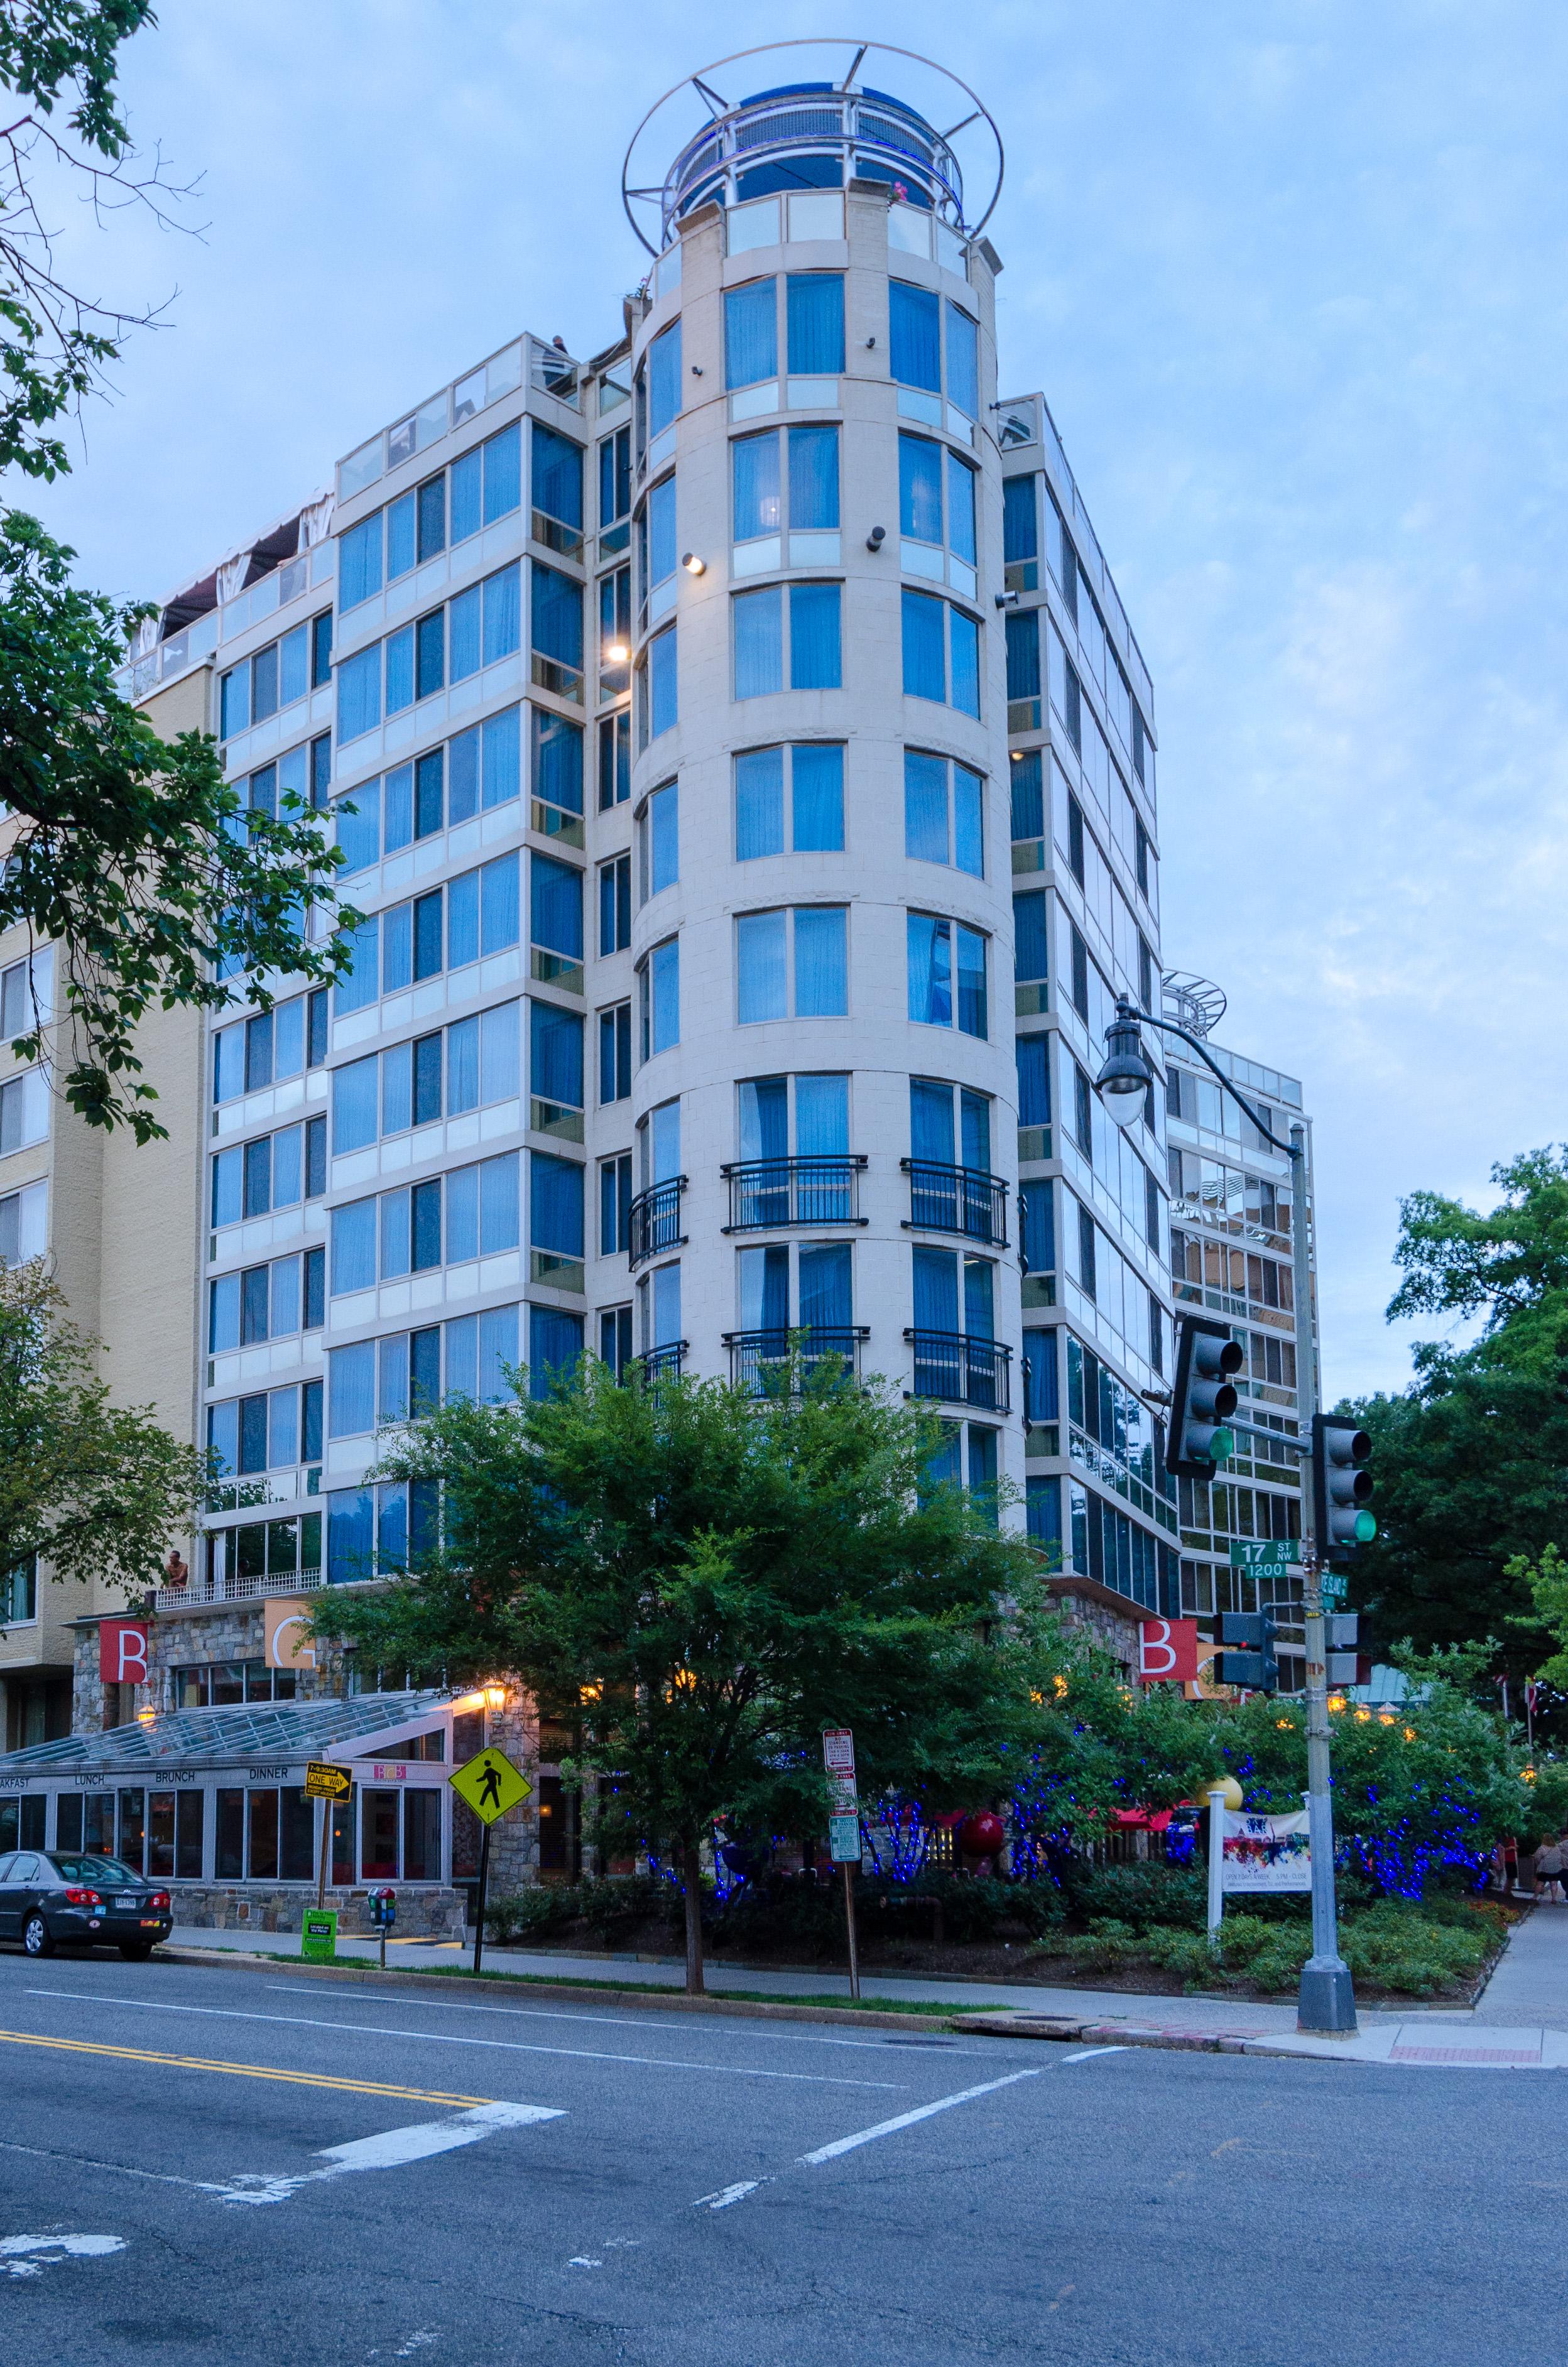 Beacon Hotel & Corporate Quarters Washington Exterior photo